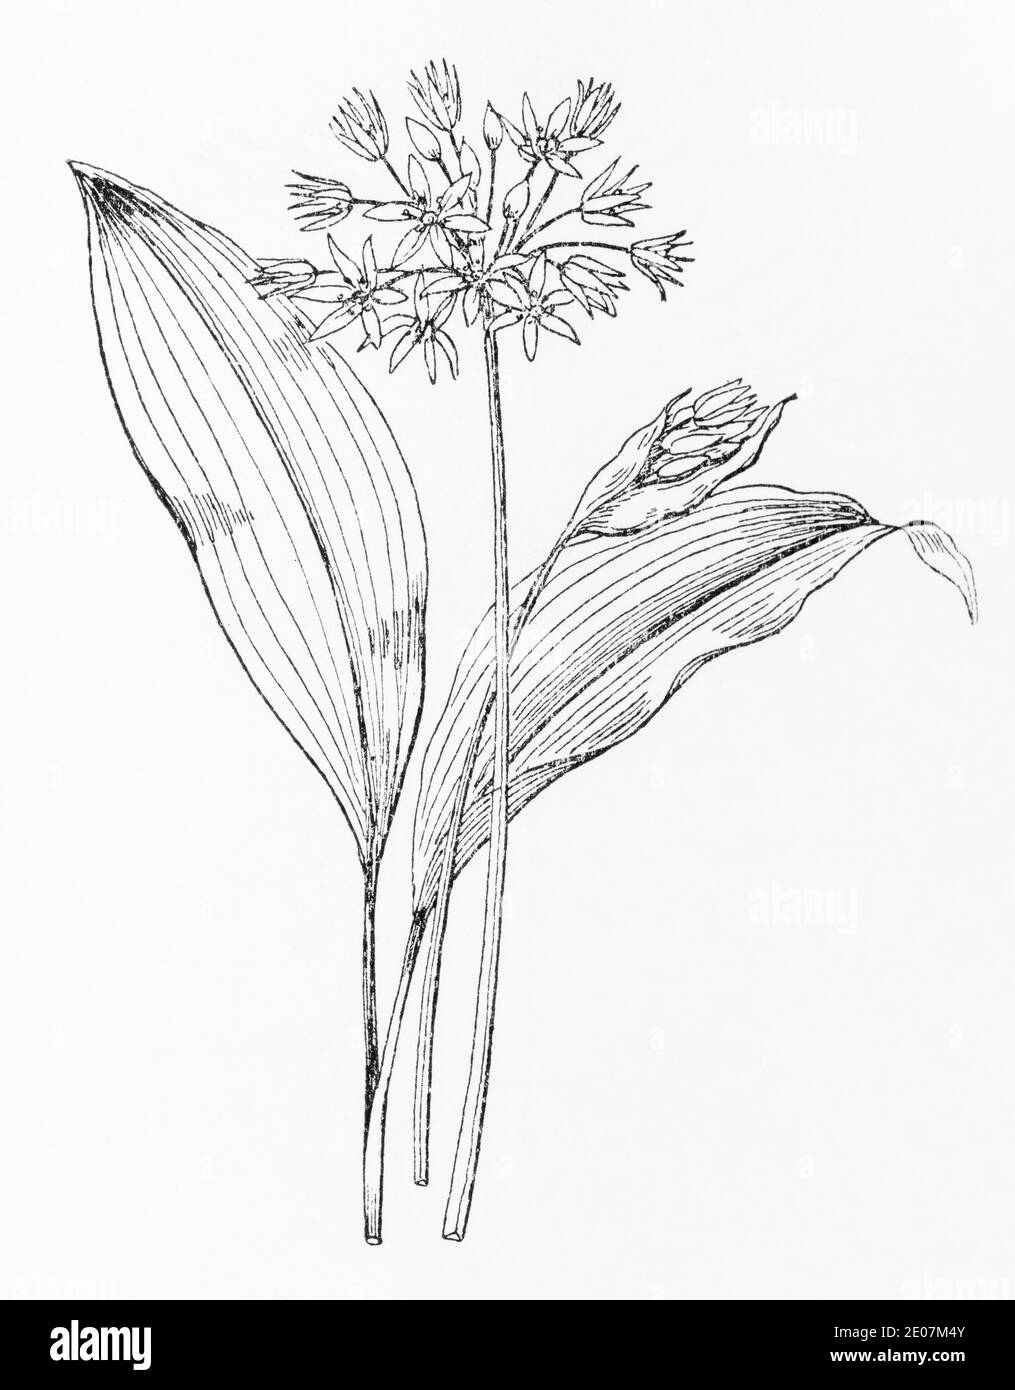 Old botanical illustration engraving of Ramsons, Bears Garlic / Allium ursinum. Traditional medicinal herbal plant. Wild garlic flowers. See Notes Stock Photo